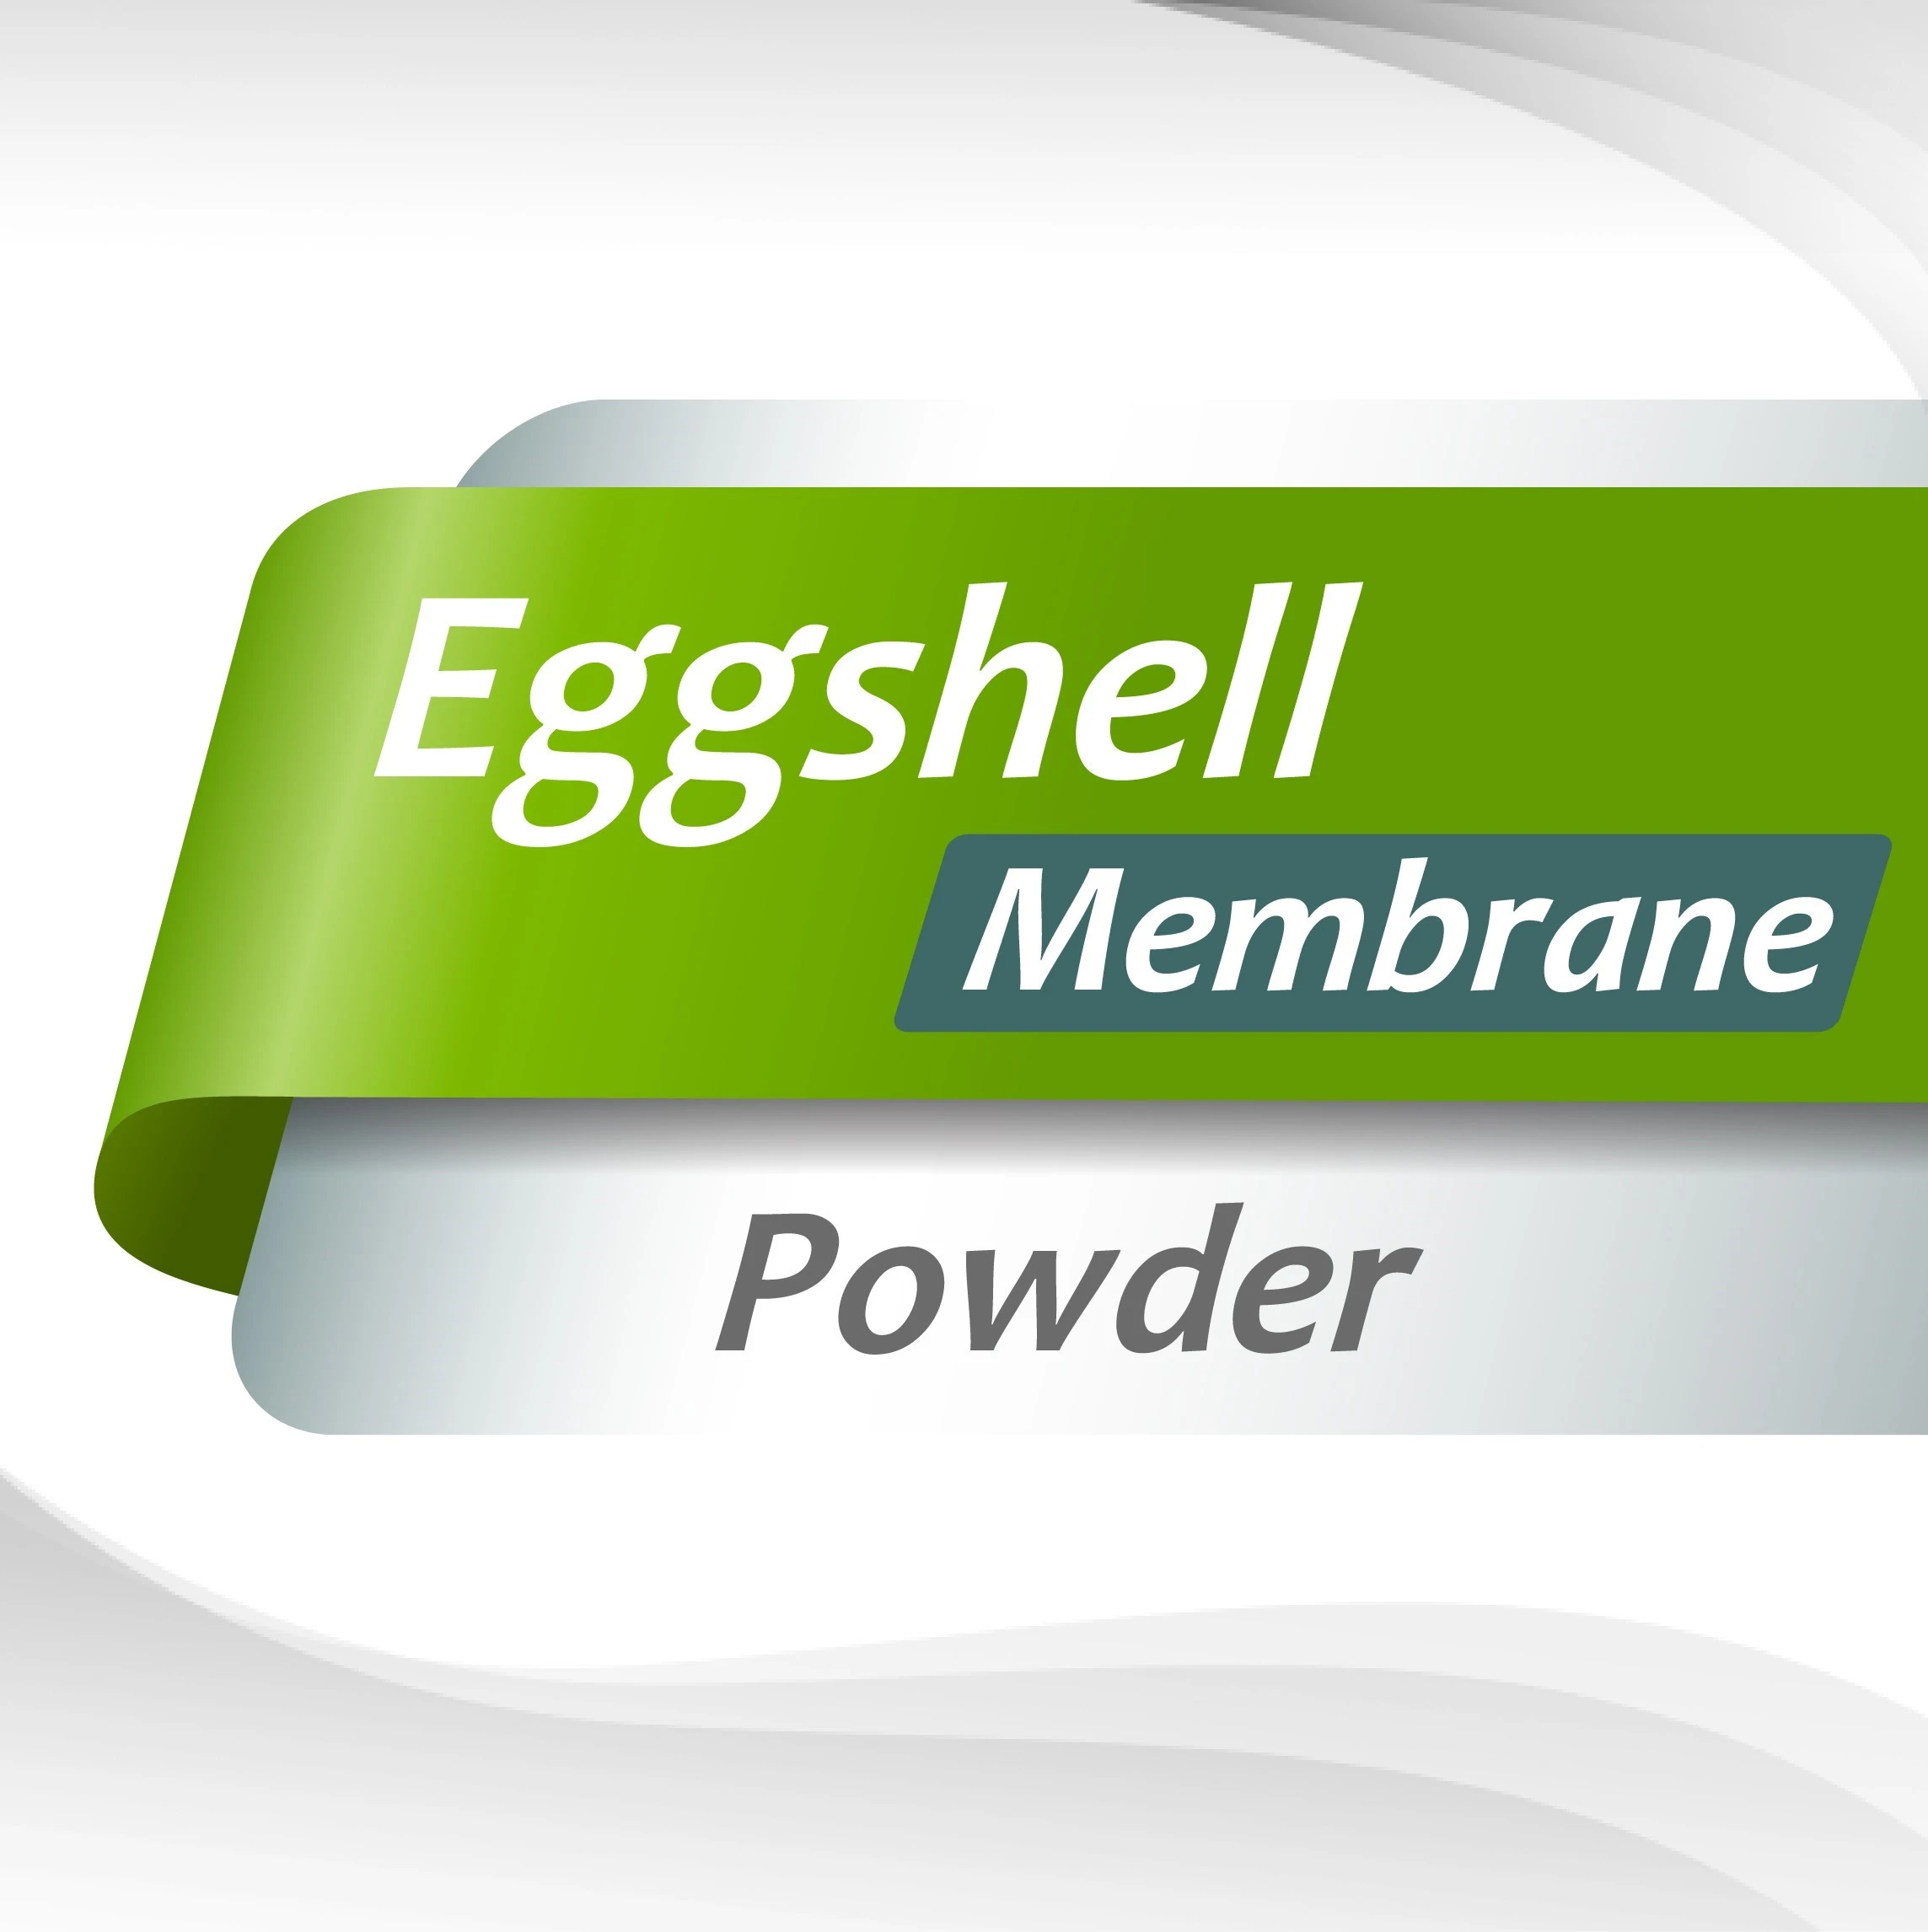 Eggshell-Membrane-Powder